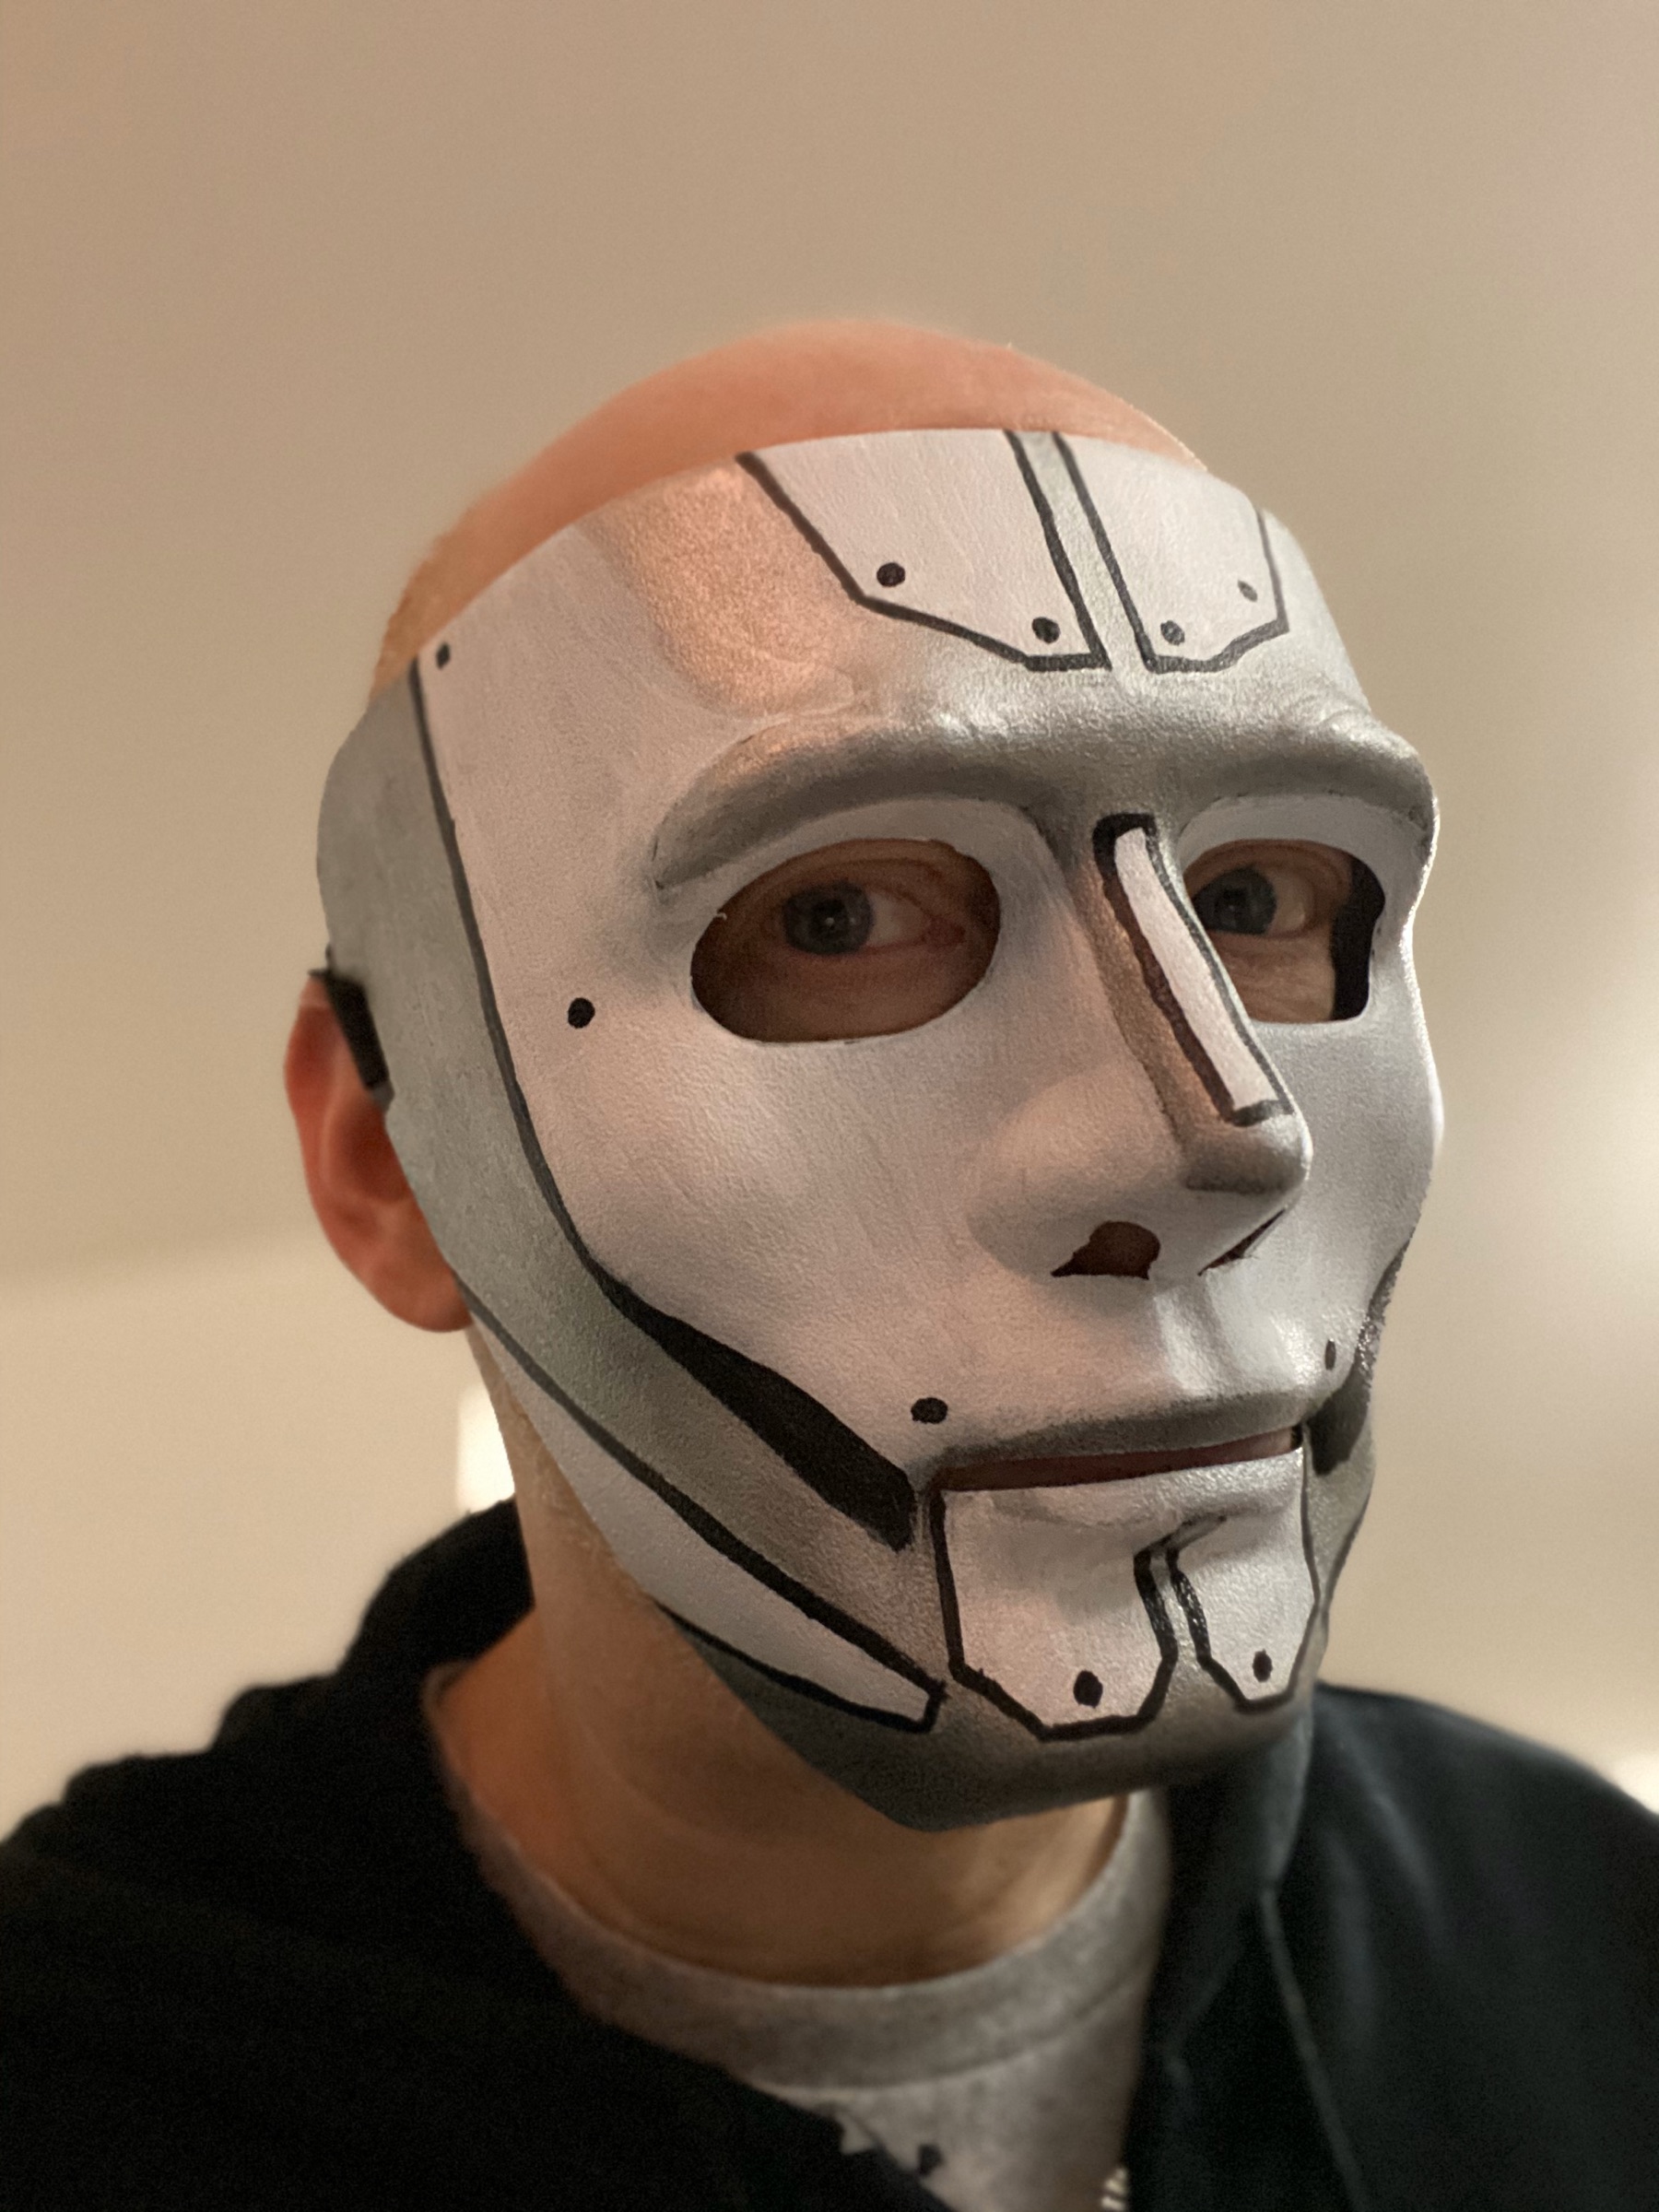 The finished mask 